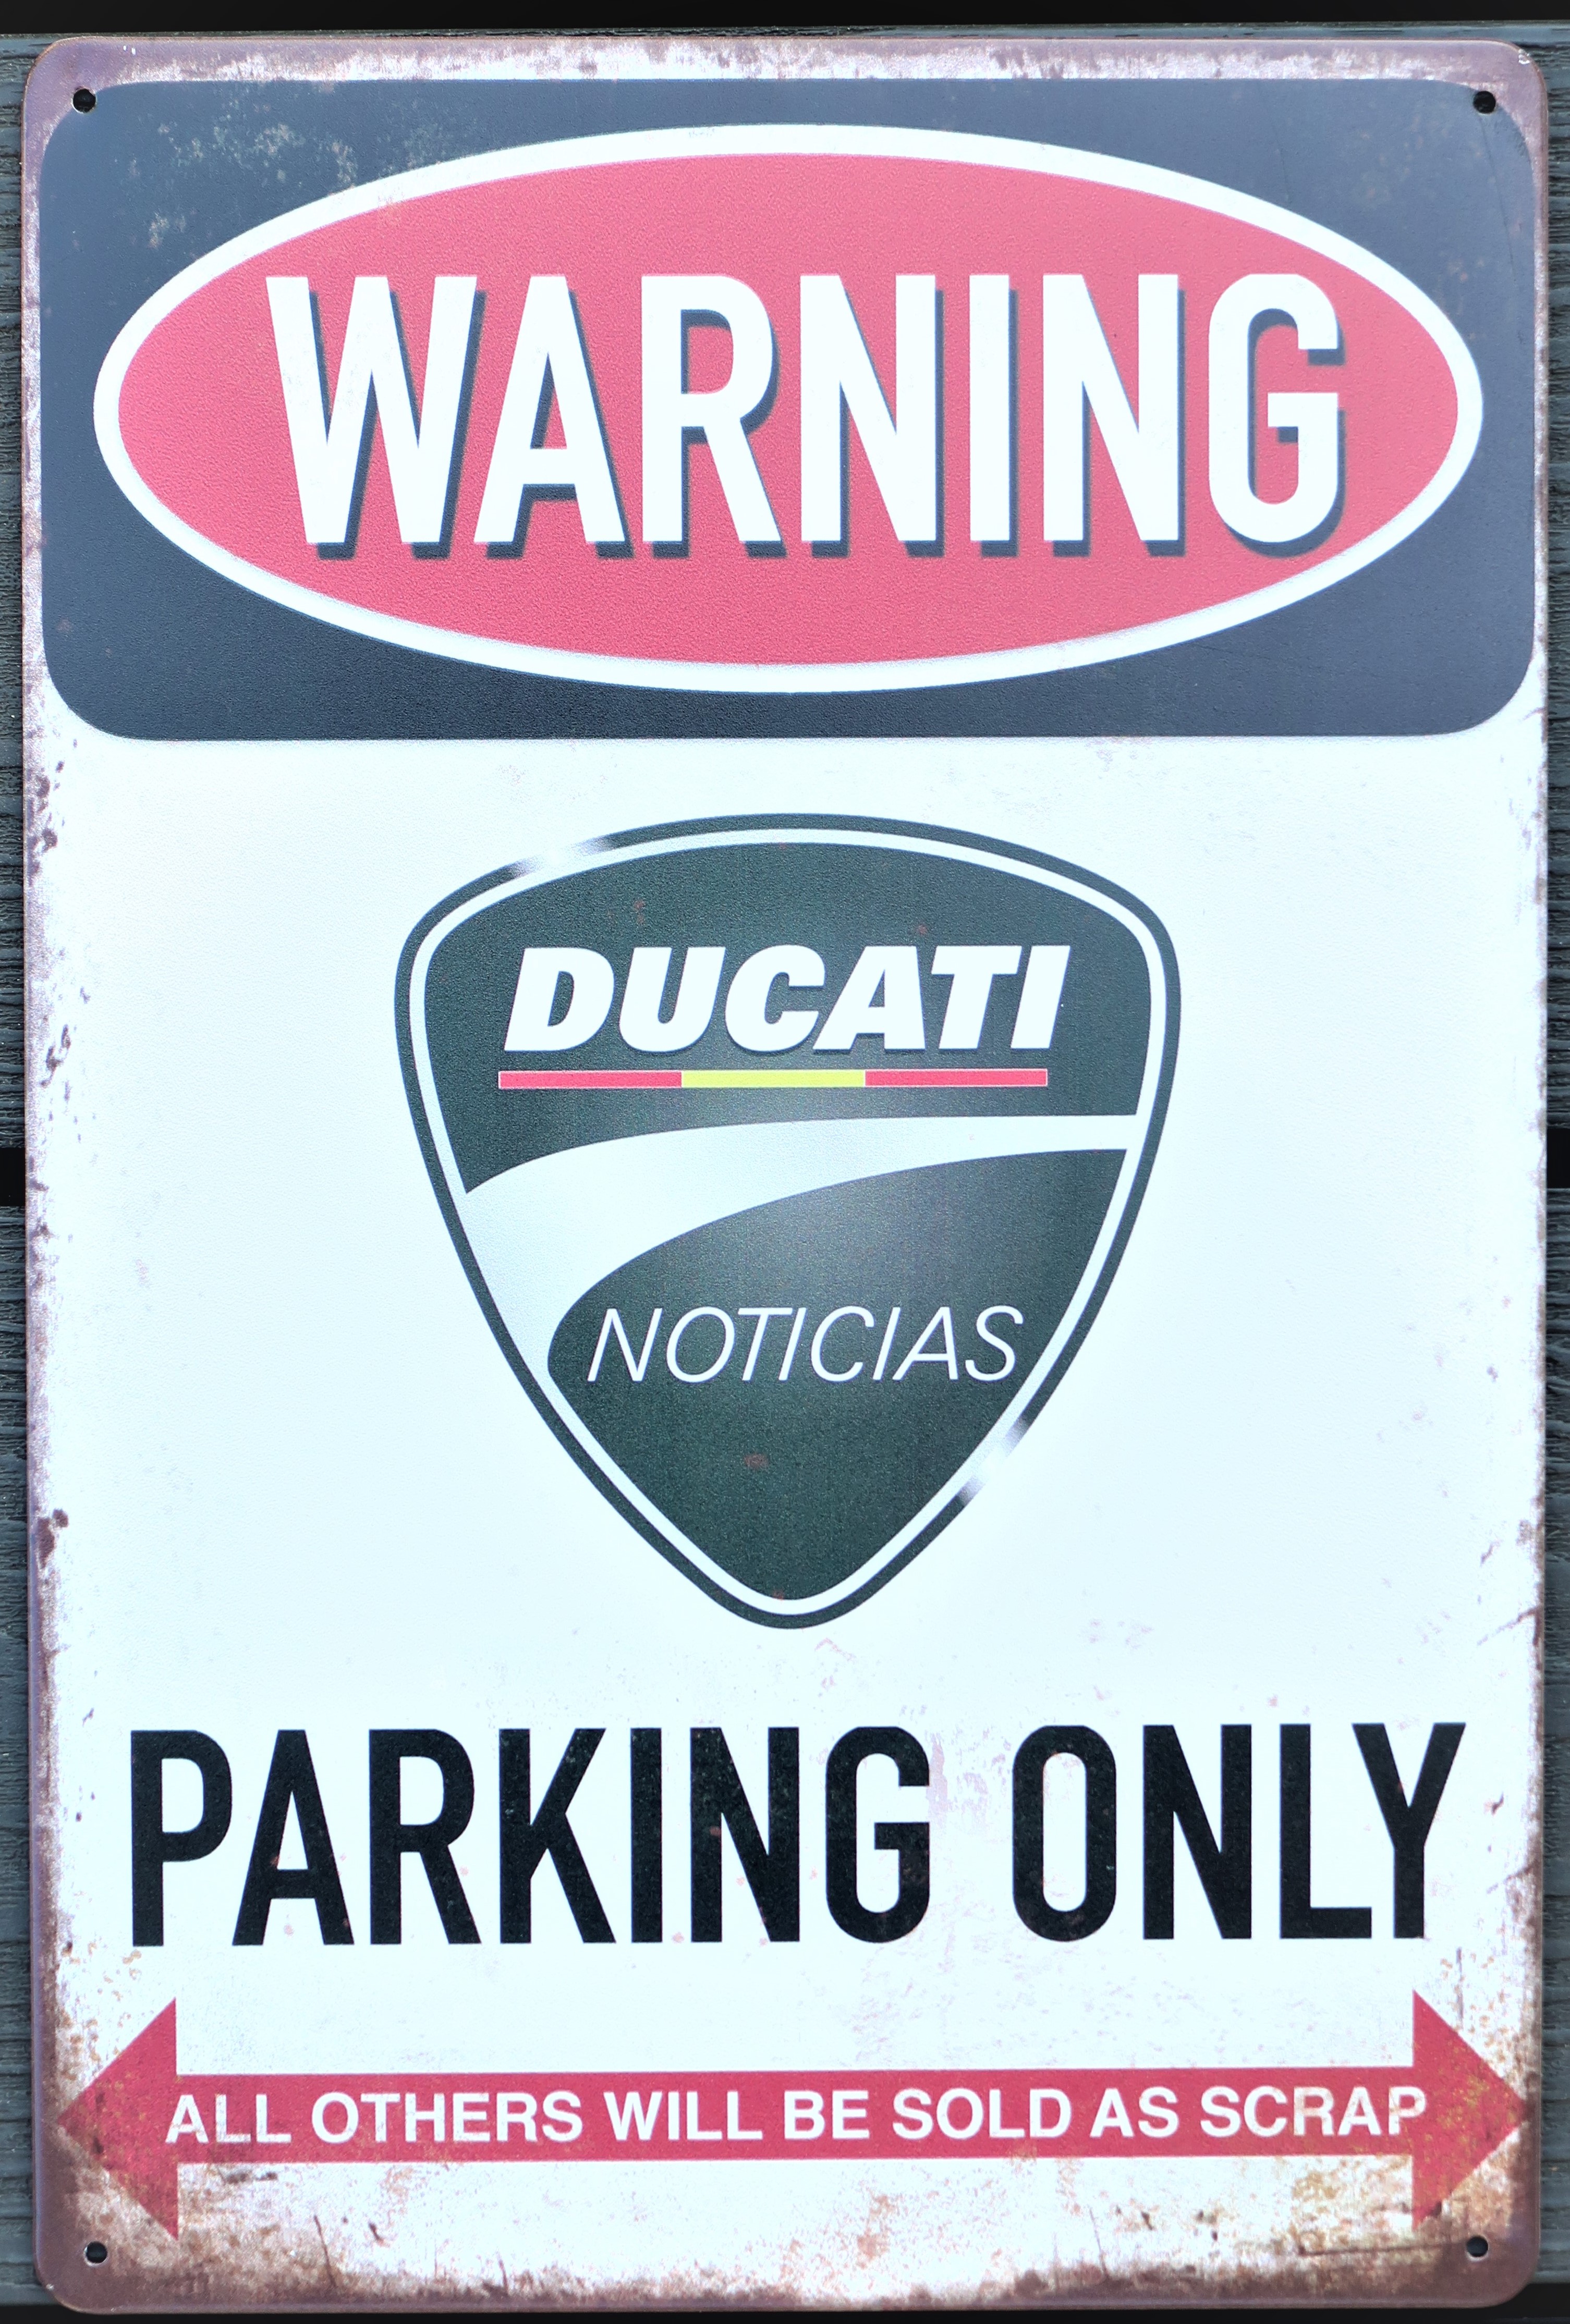 Ducati Parking Only Motorbike Motorcycle Metal Aluminium Vintage Garage Art Metal Sign